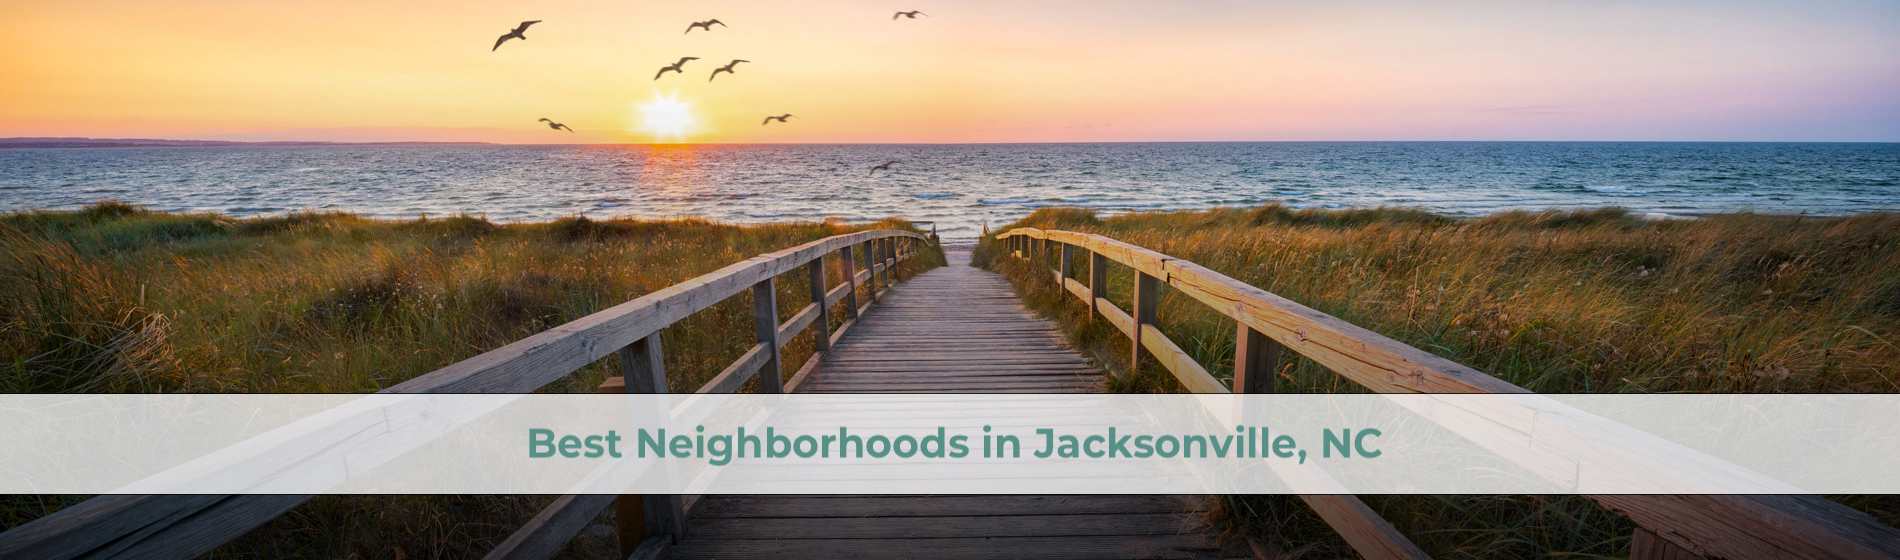 best neighborhoods jacksonville north carolina